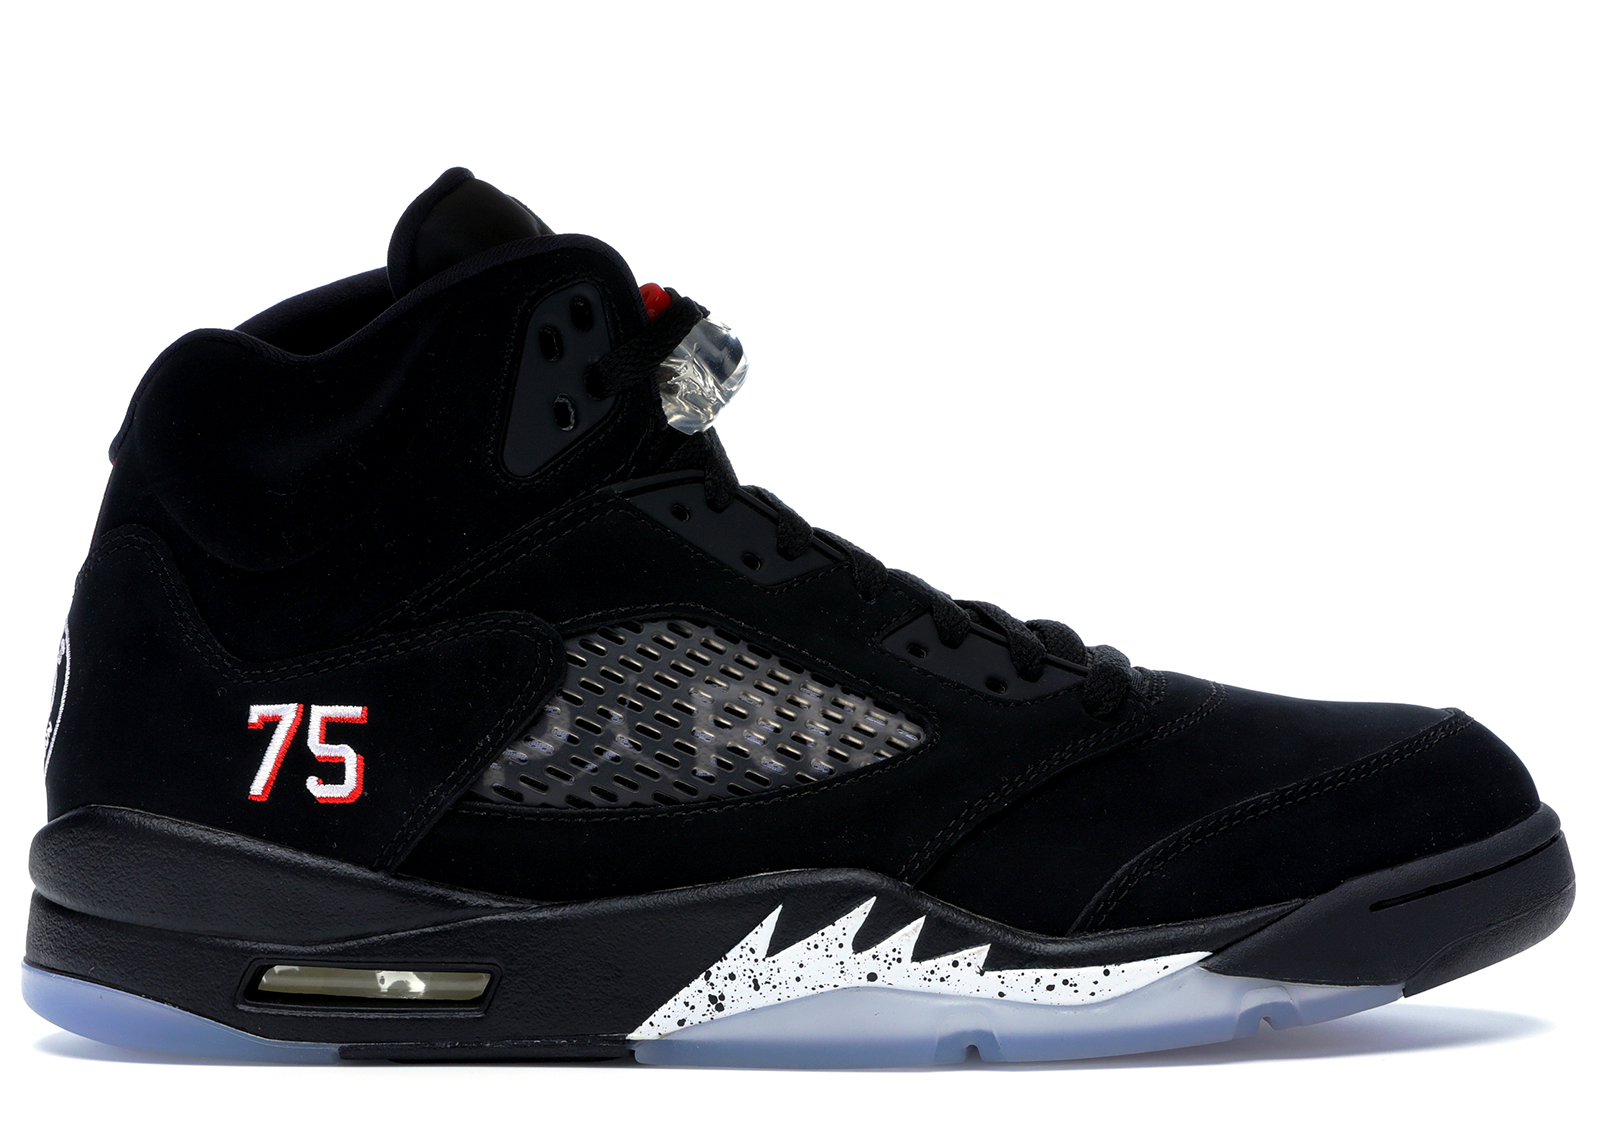 Buy Air Jordan 5 Size 13 Shoes & Deadstock Sneakers